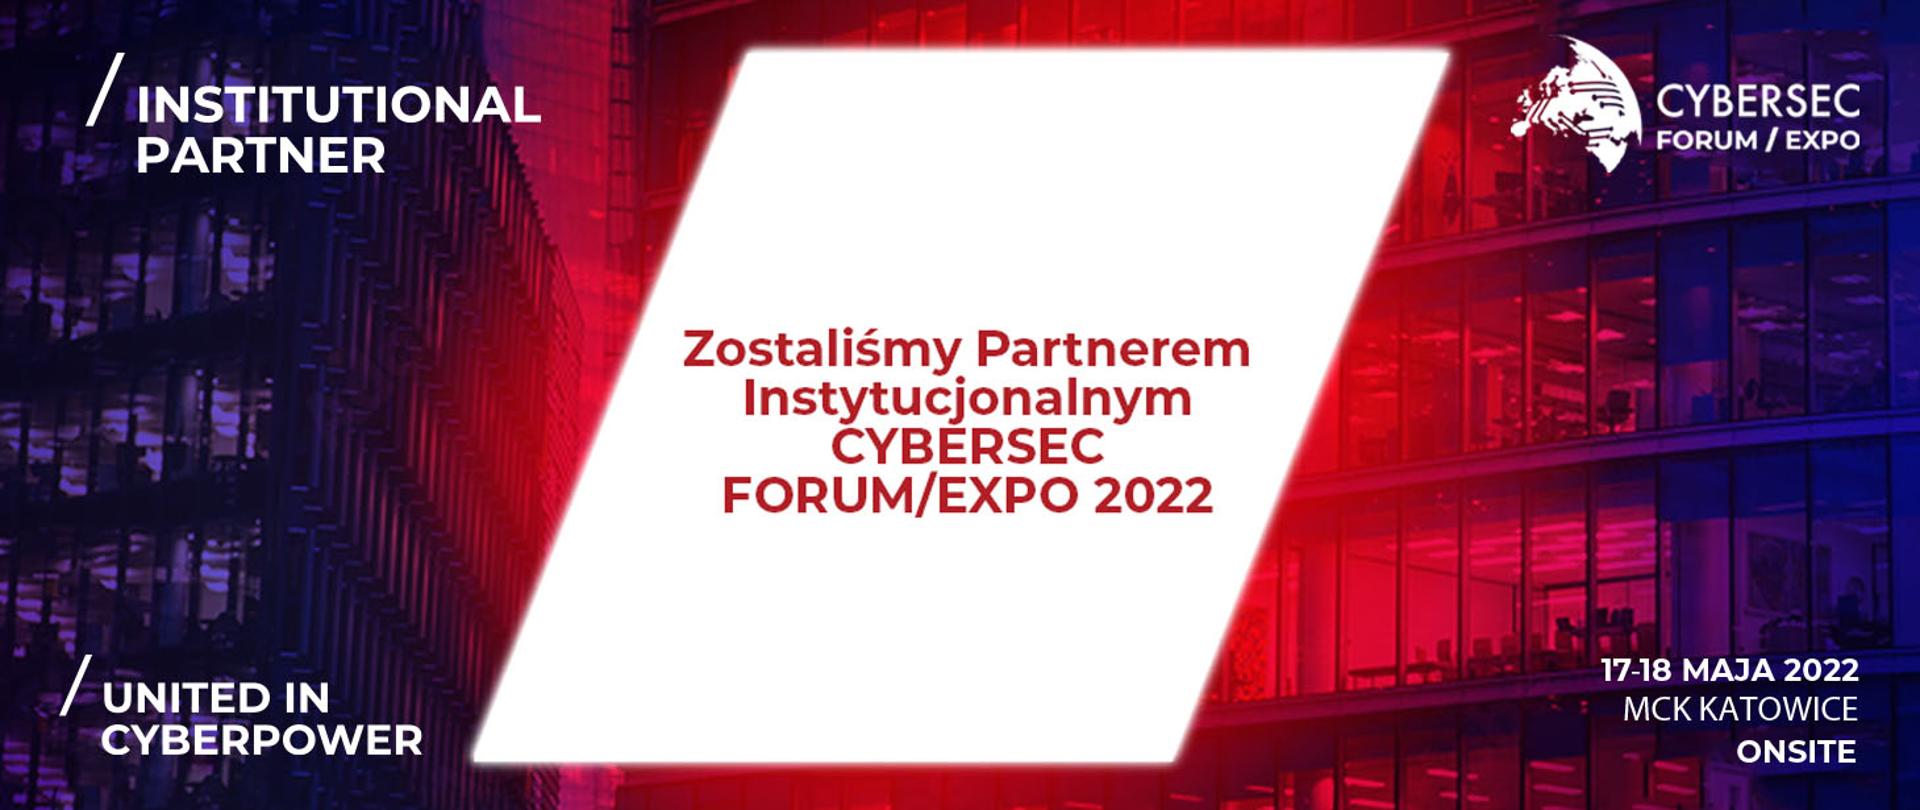 CYBERSEC FORUM/EXPO 2022 - zostaliśmy Partnerem Instytucjonalnym